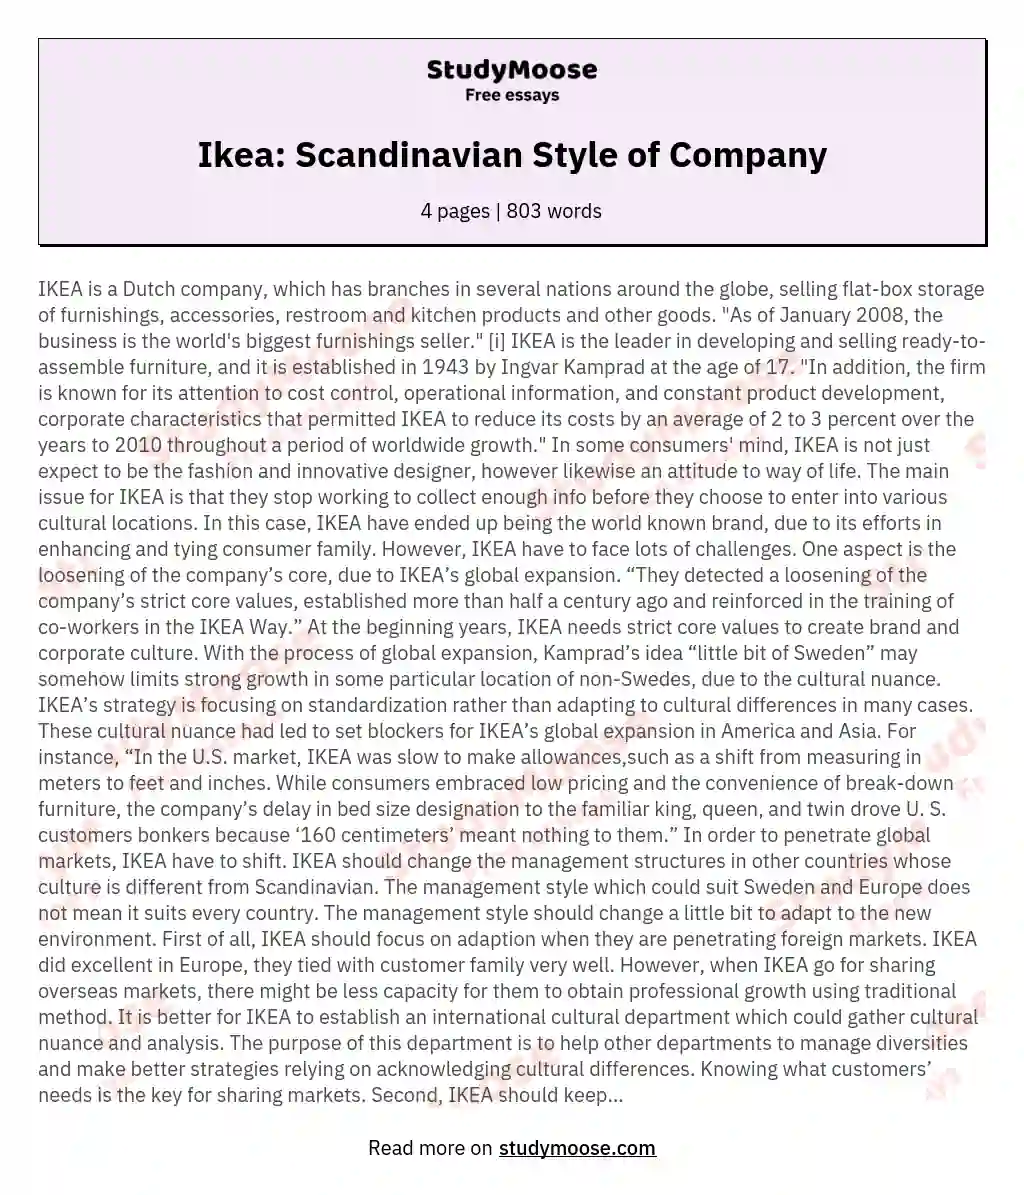 Ikea: Scandinavian Style of Company essay